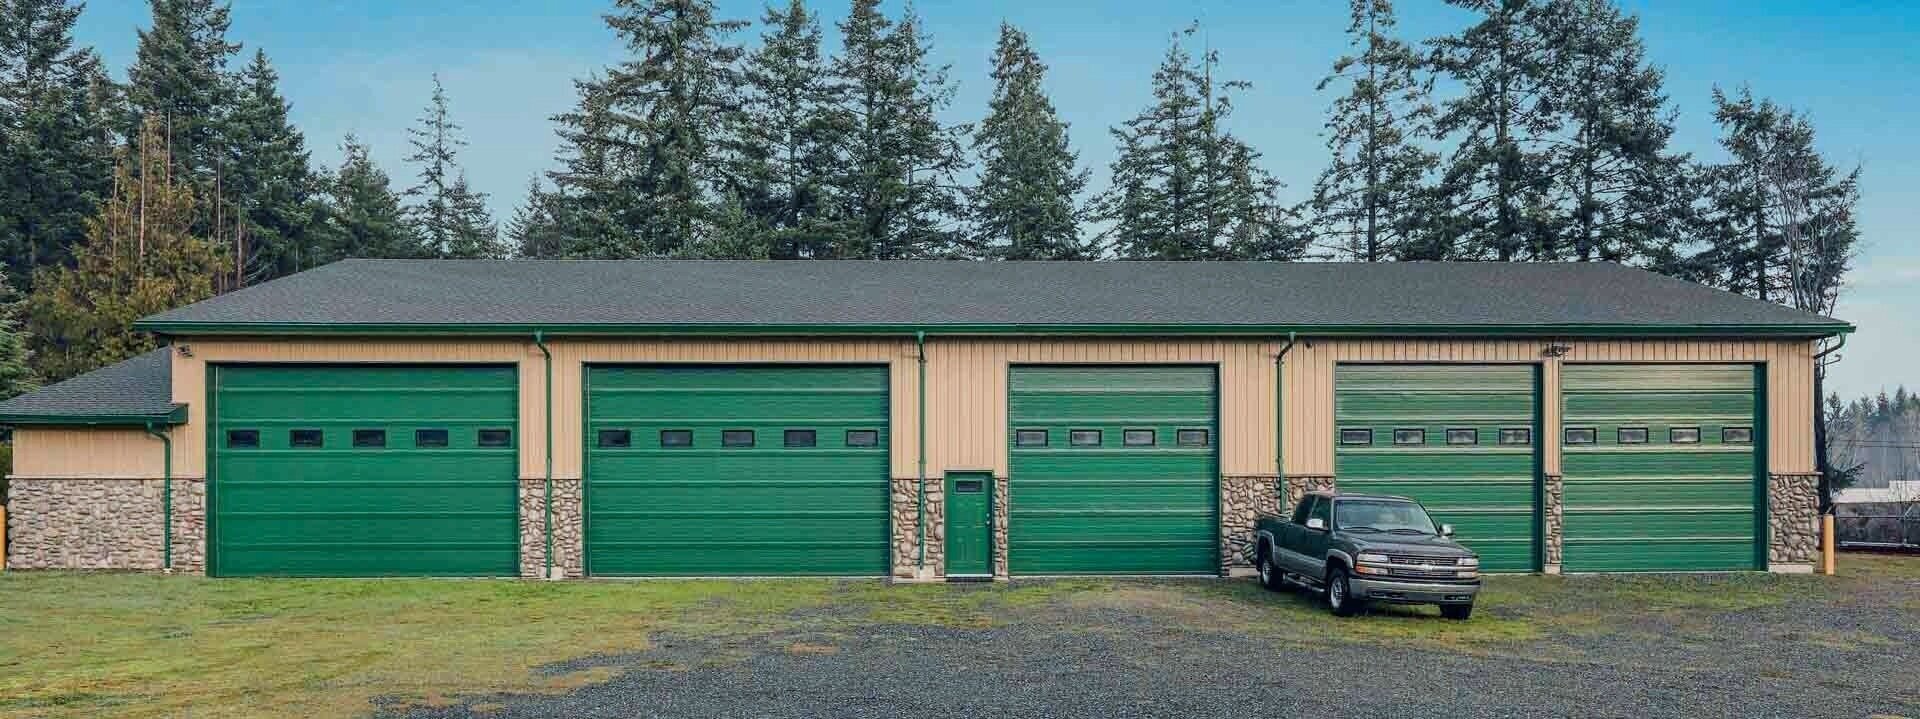 Large storage units with garage doors.